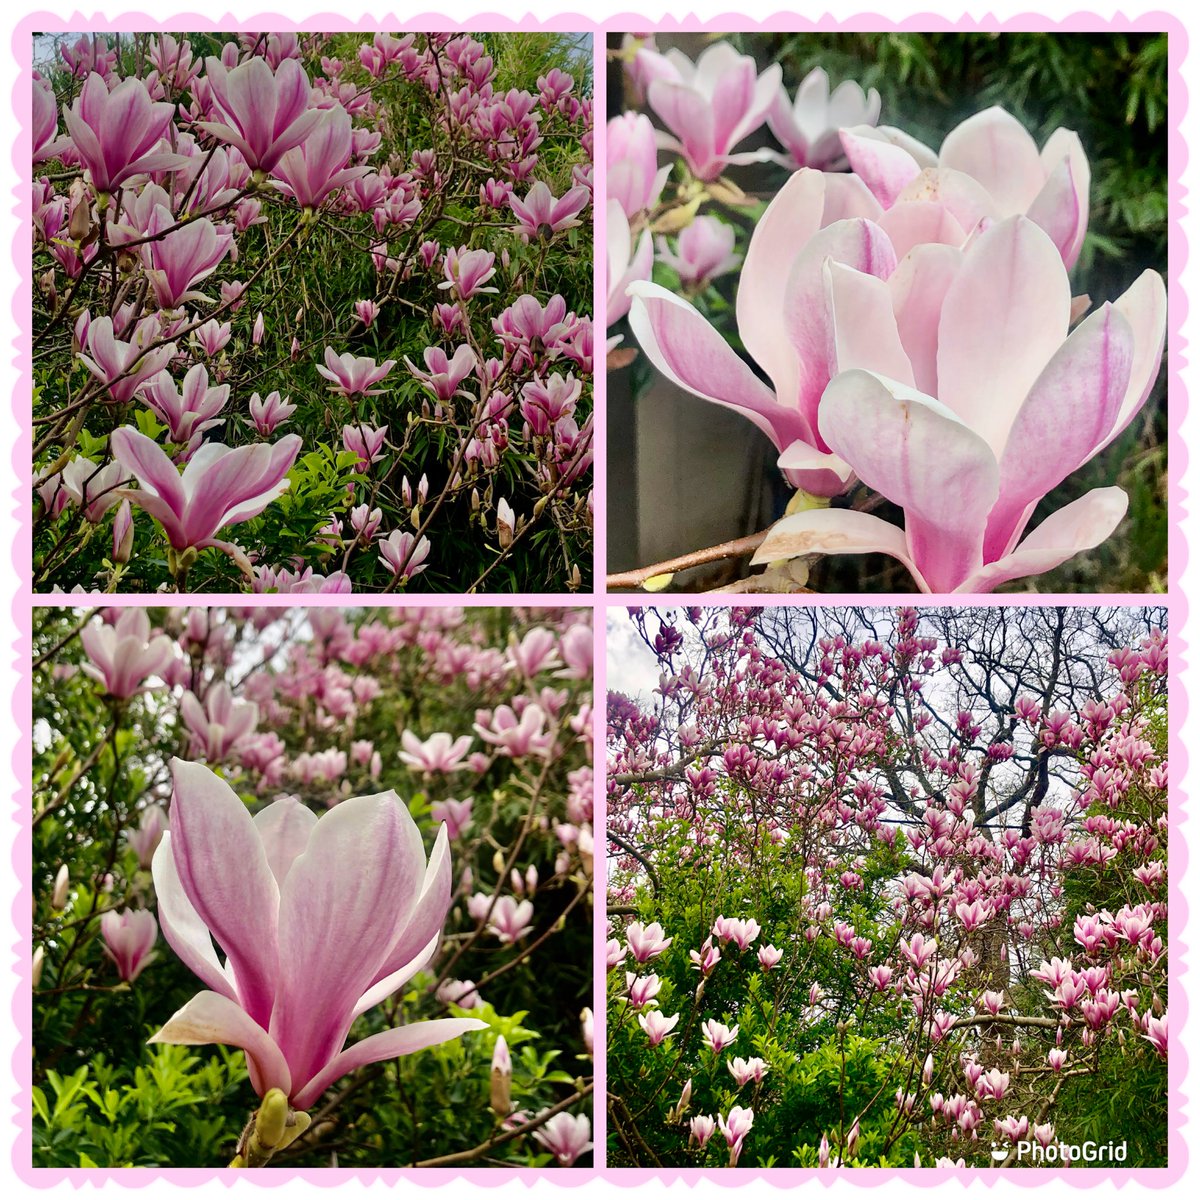 My magnolia is at its best 💗💗💗#FlowersOnFriday #Magnolia #Spring #PinkFriday #Gardening